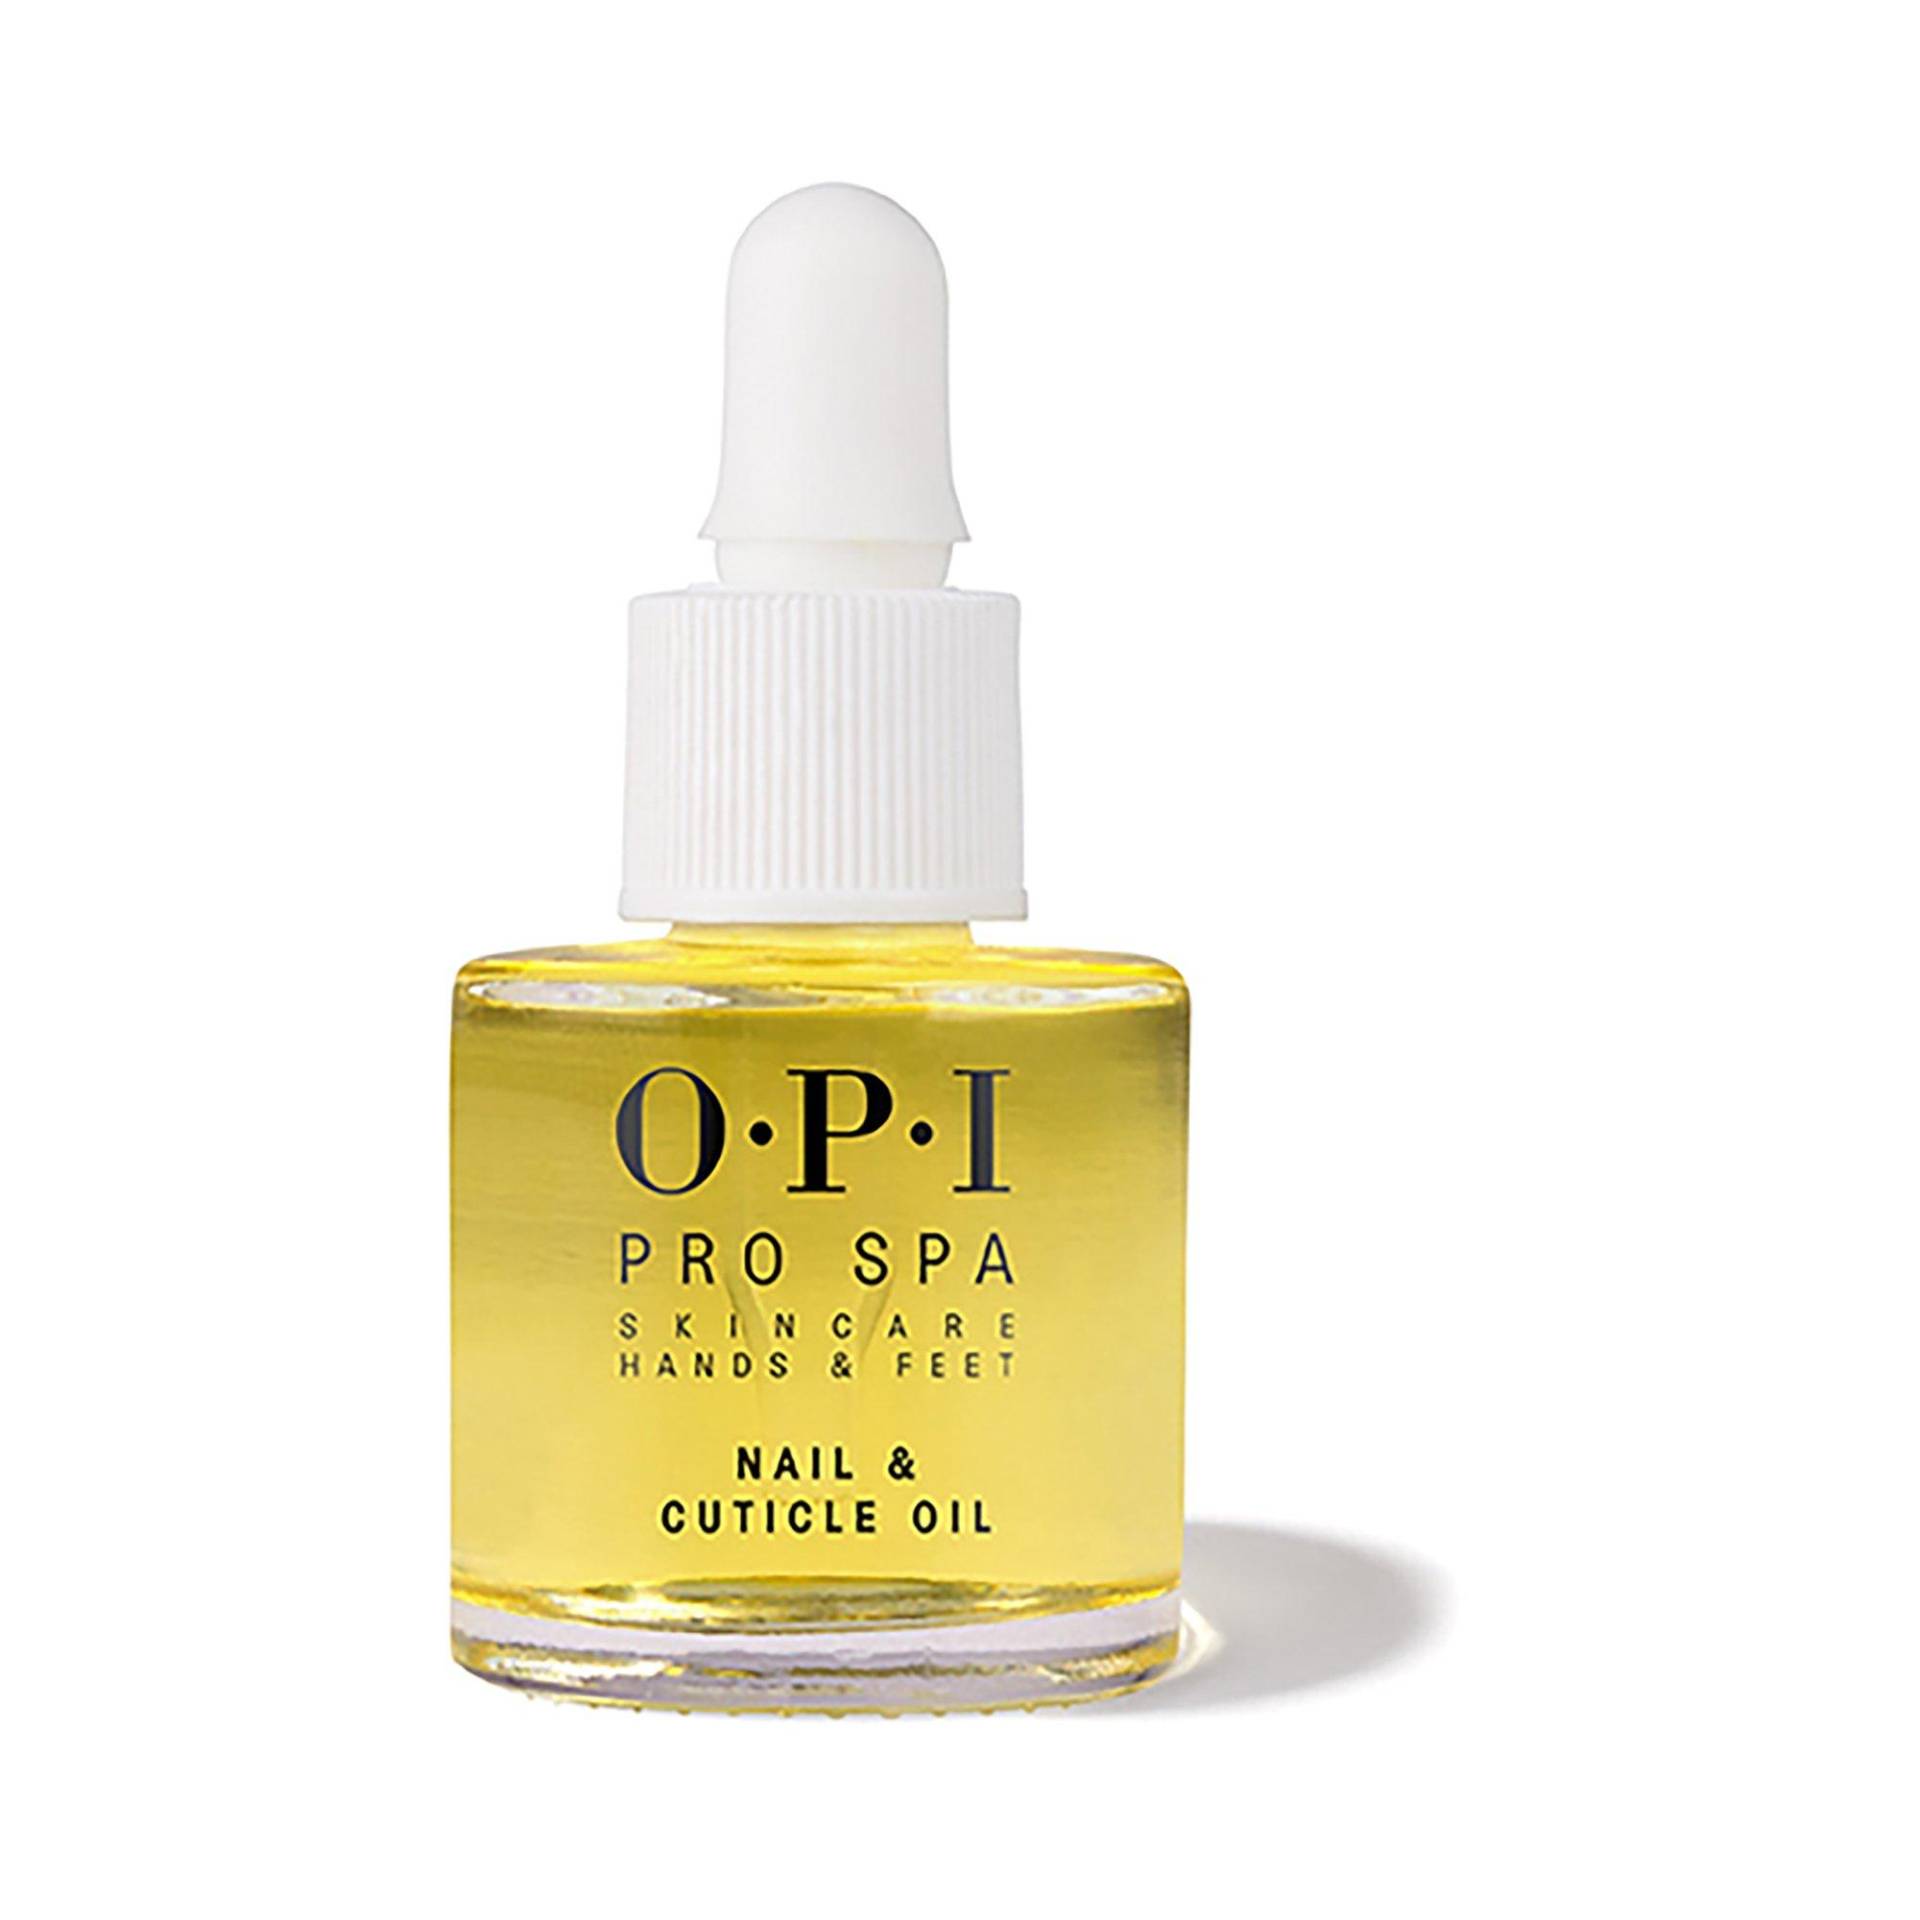 Nagelhautöl – Prospa Prospa Nail & Cuticle Oil Damen Multicolor 8,6 ml von OPI